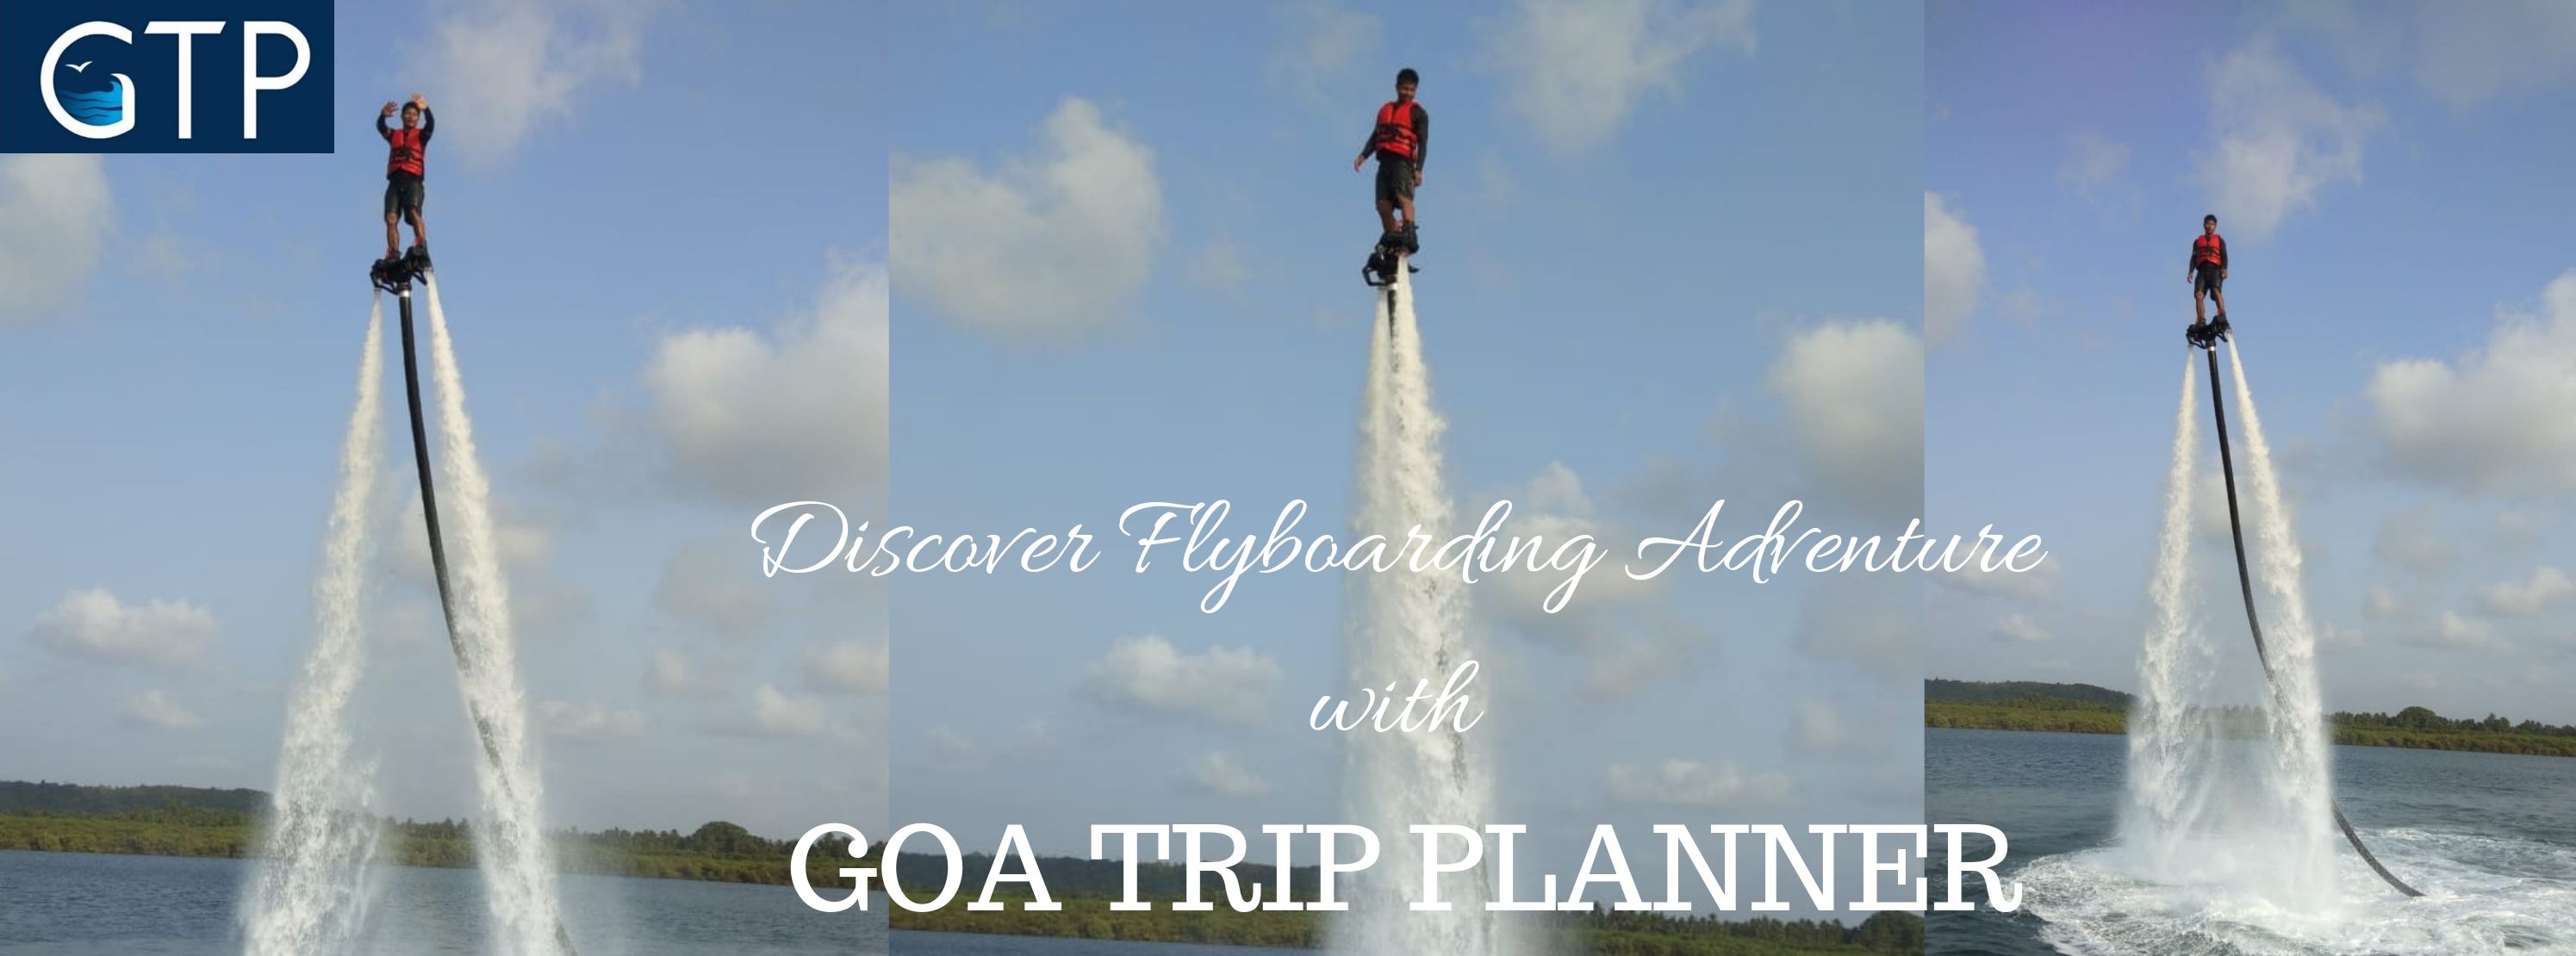 Flyboarding in Goa with Goa Trip Planner, North Goa, Goa, India